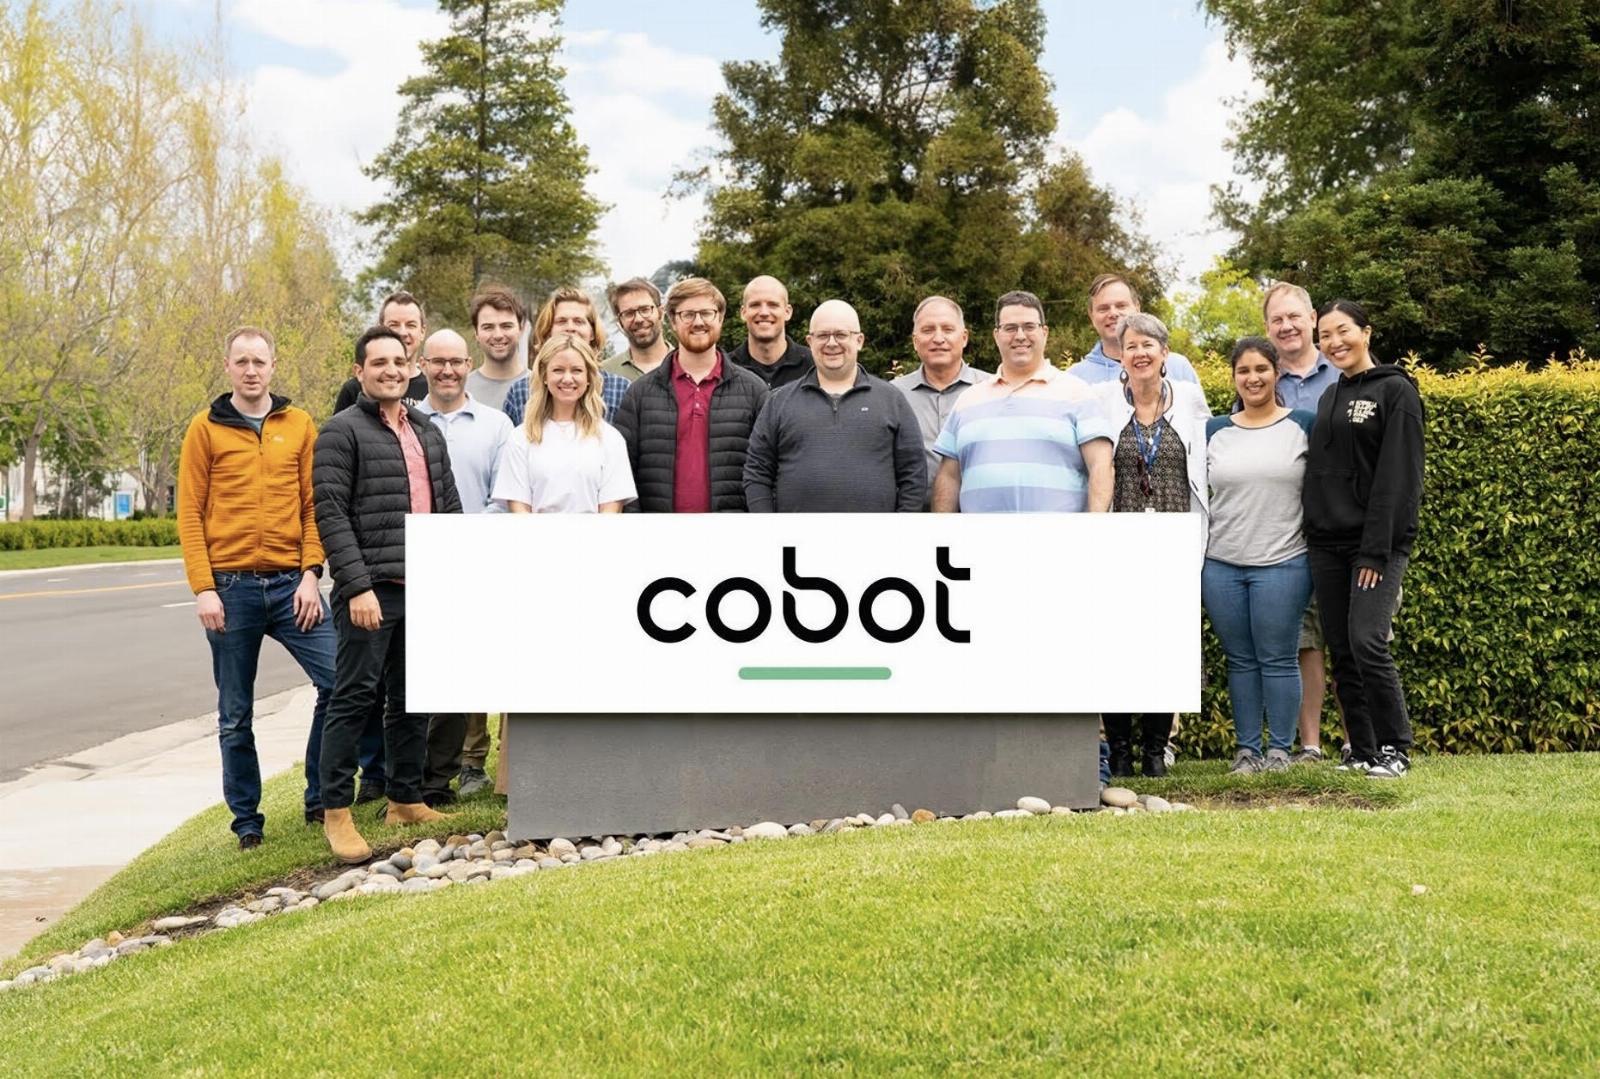 Collaborative Robotics raises $30M to develop and deploy ‘novel cobot’